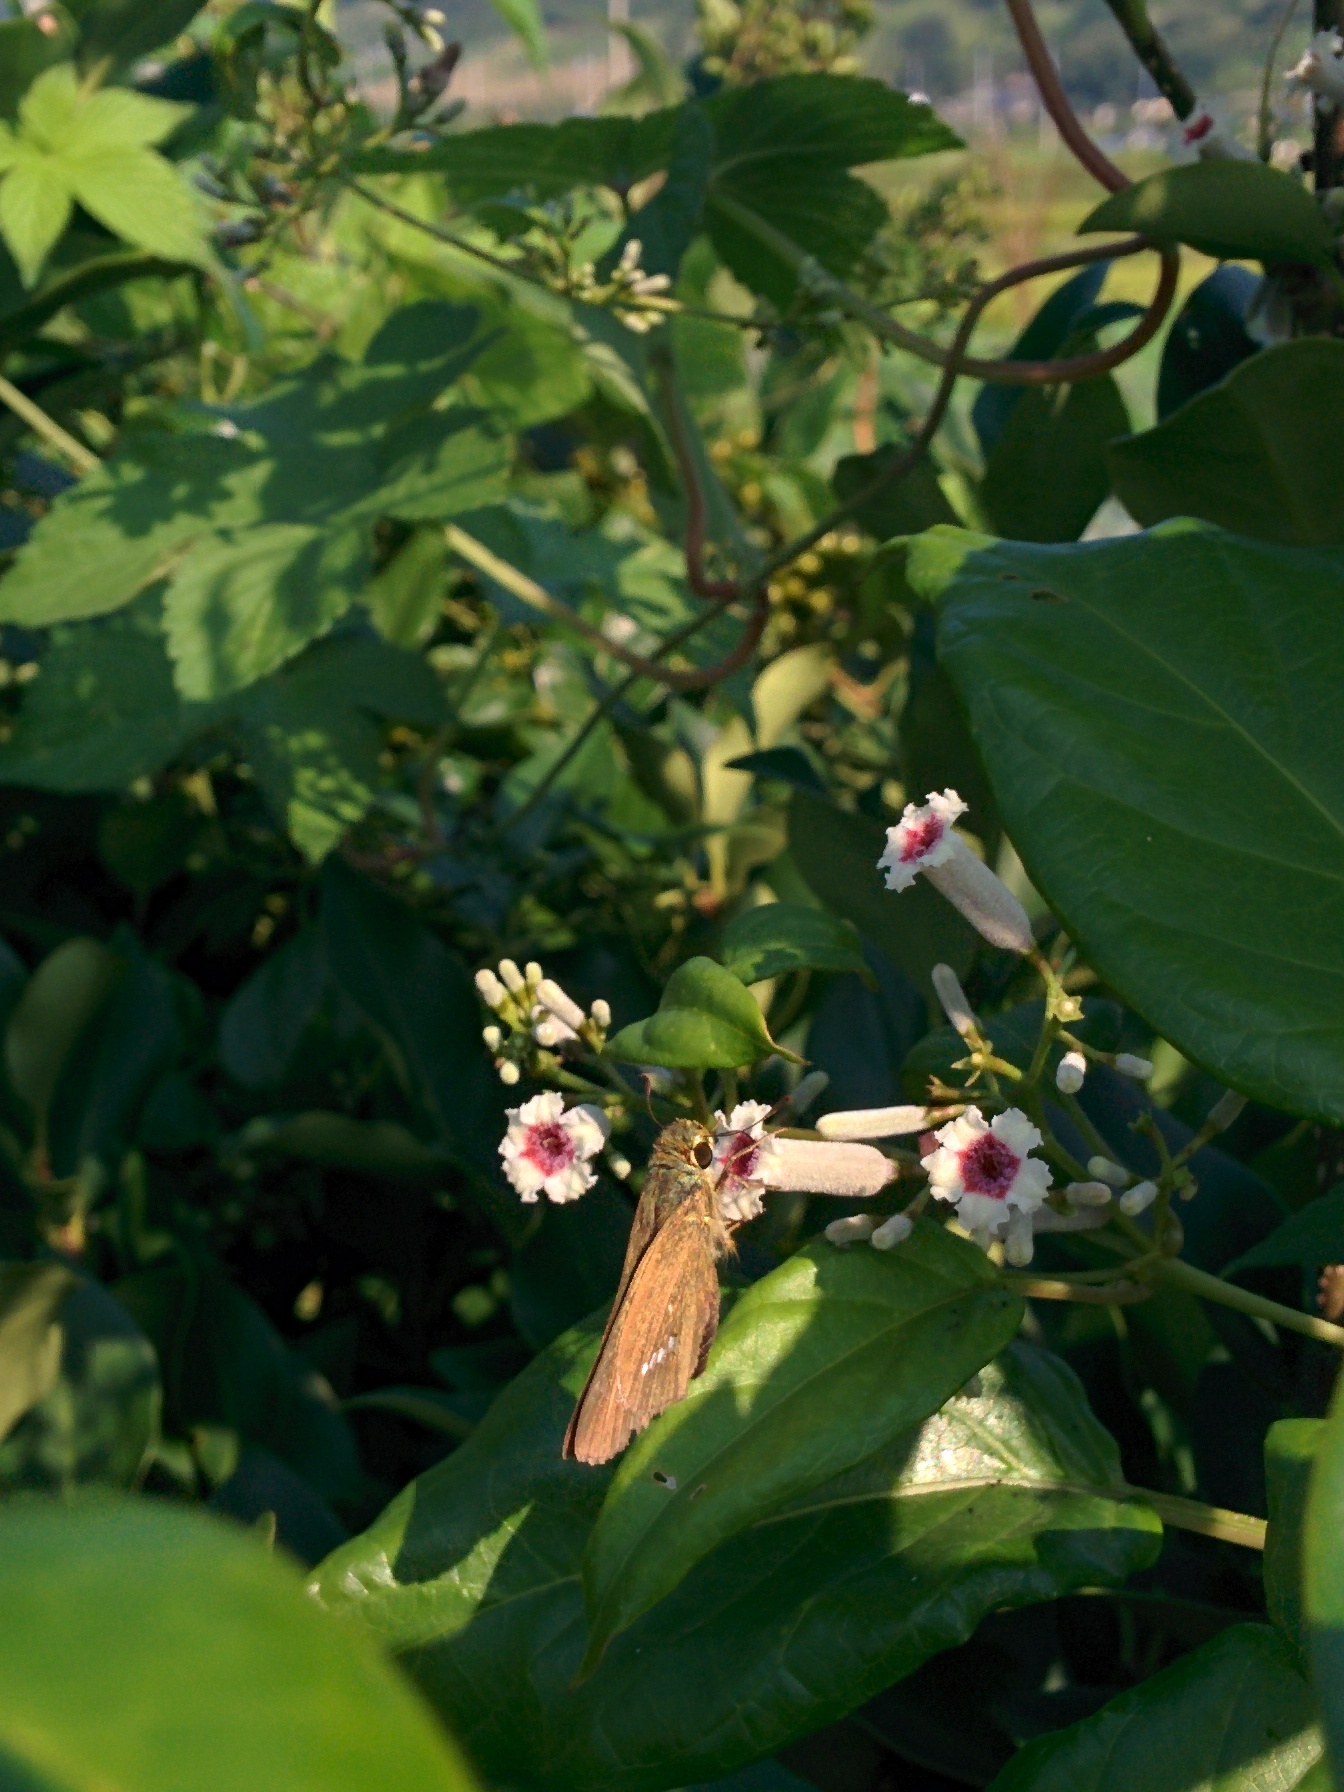 IMG_20150911_090151.jpg 작은 종 모양 꽃을 피우는 계요등(鷄尿藤), 꽃꿀을 빠는 줄점팔랑나비